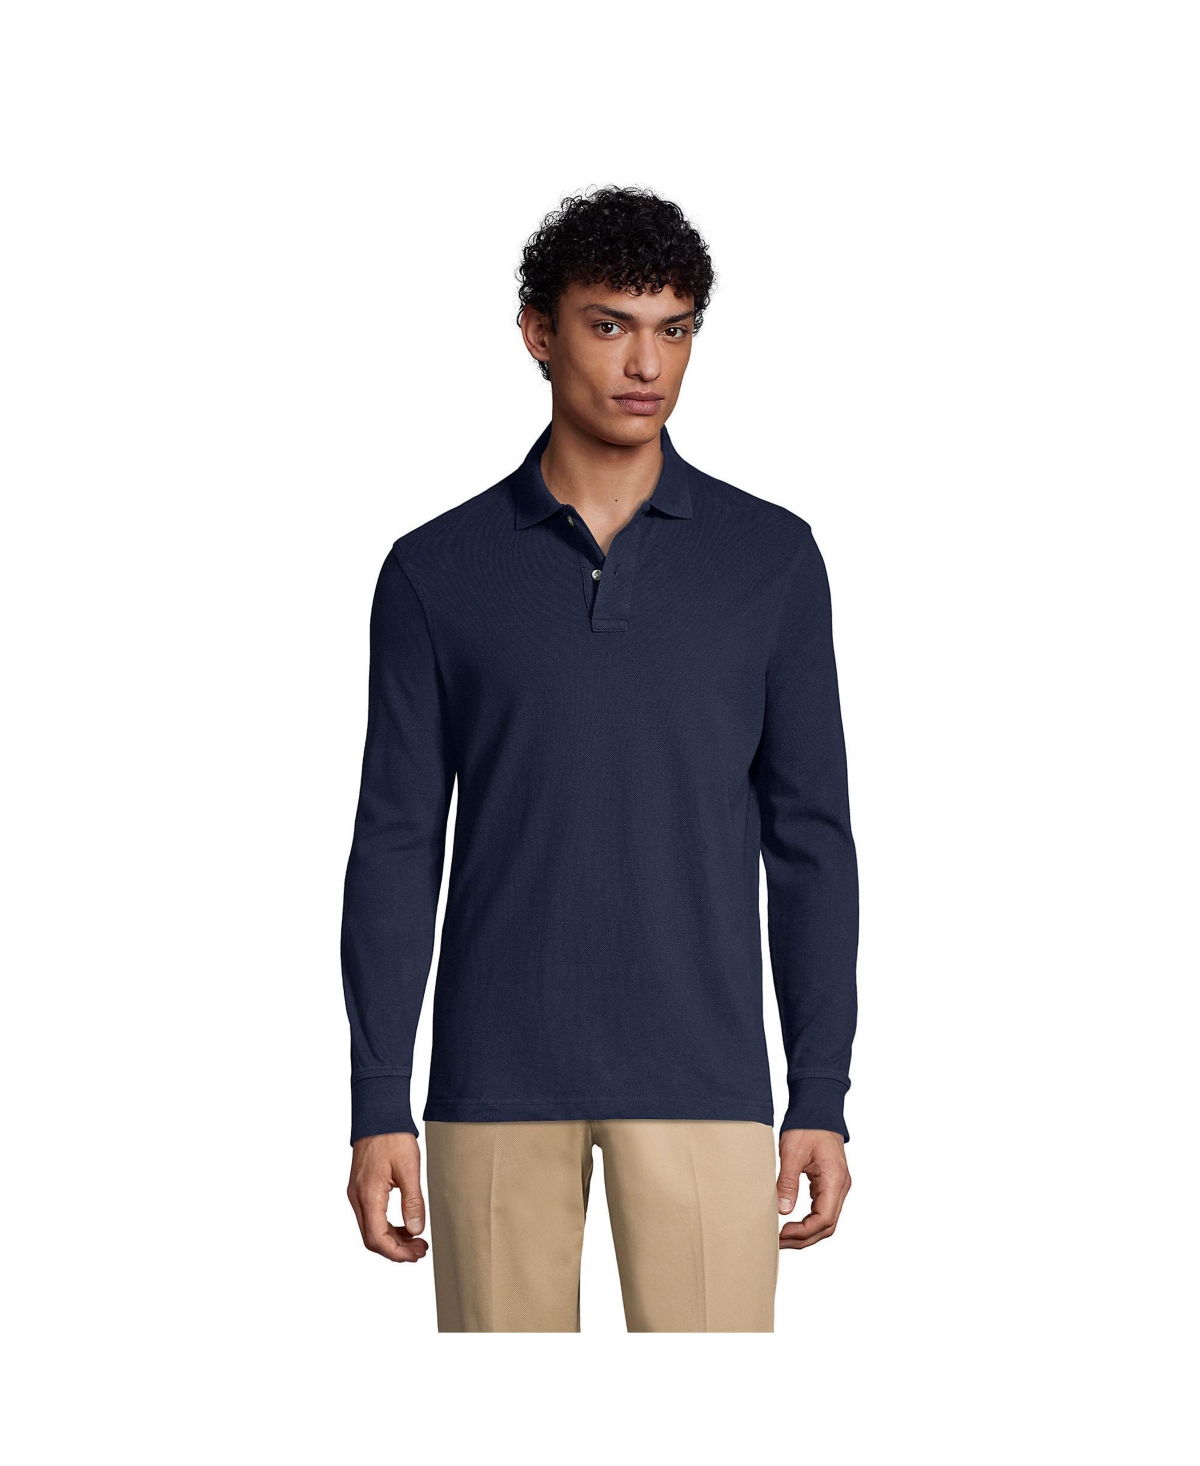 Men's School Uniform Long Sleeve Mesh Polo Shirt - Classic navy